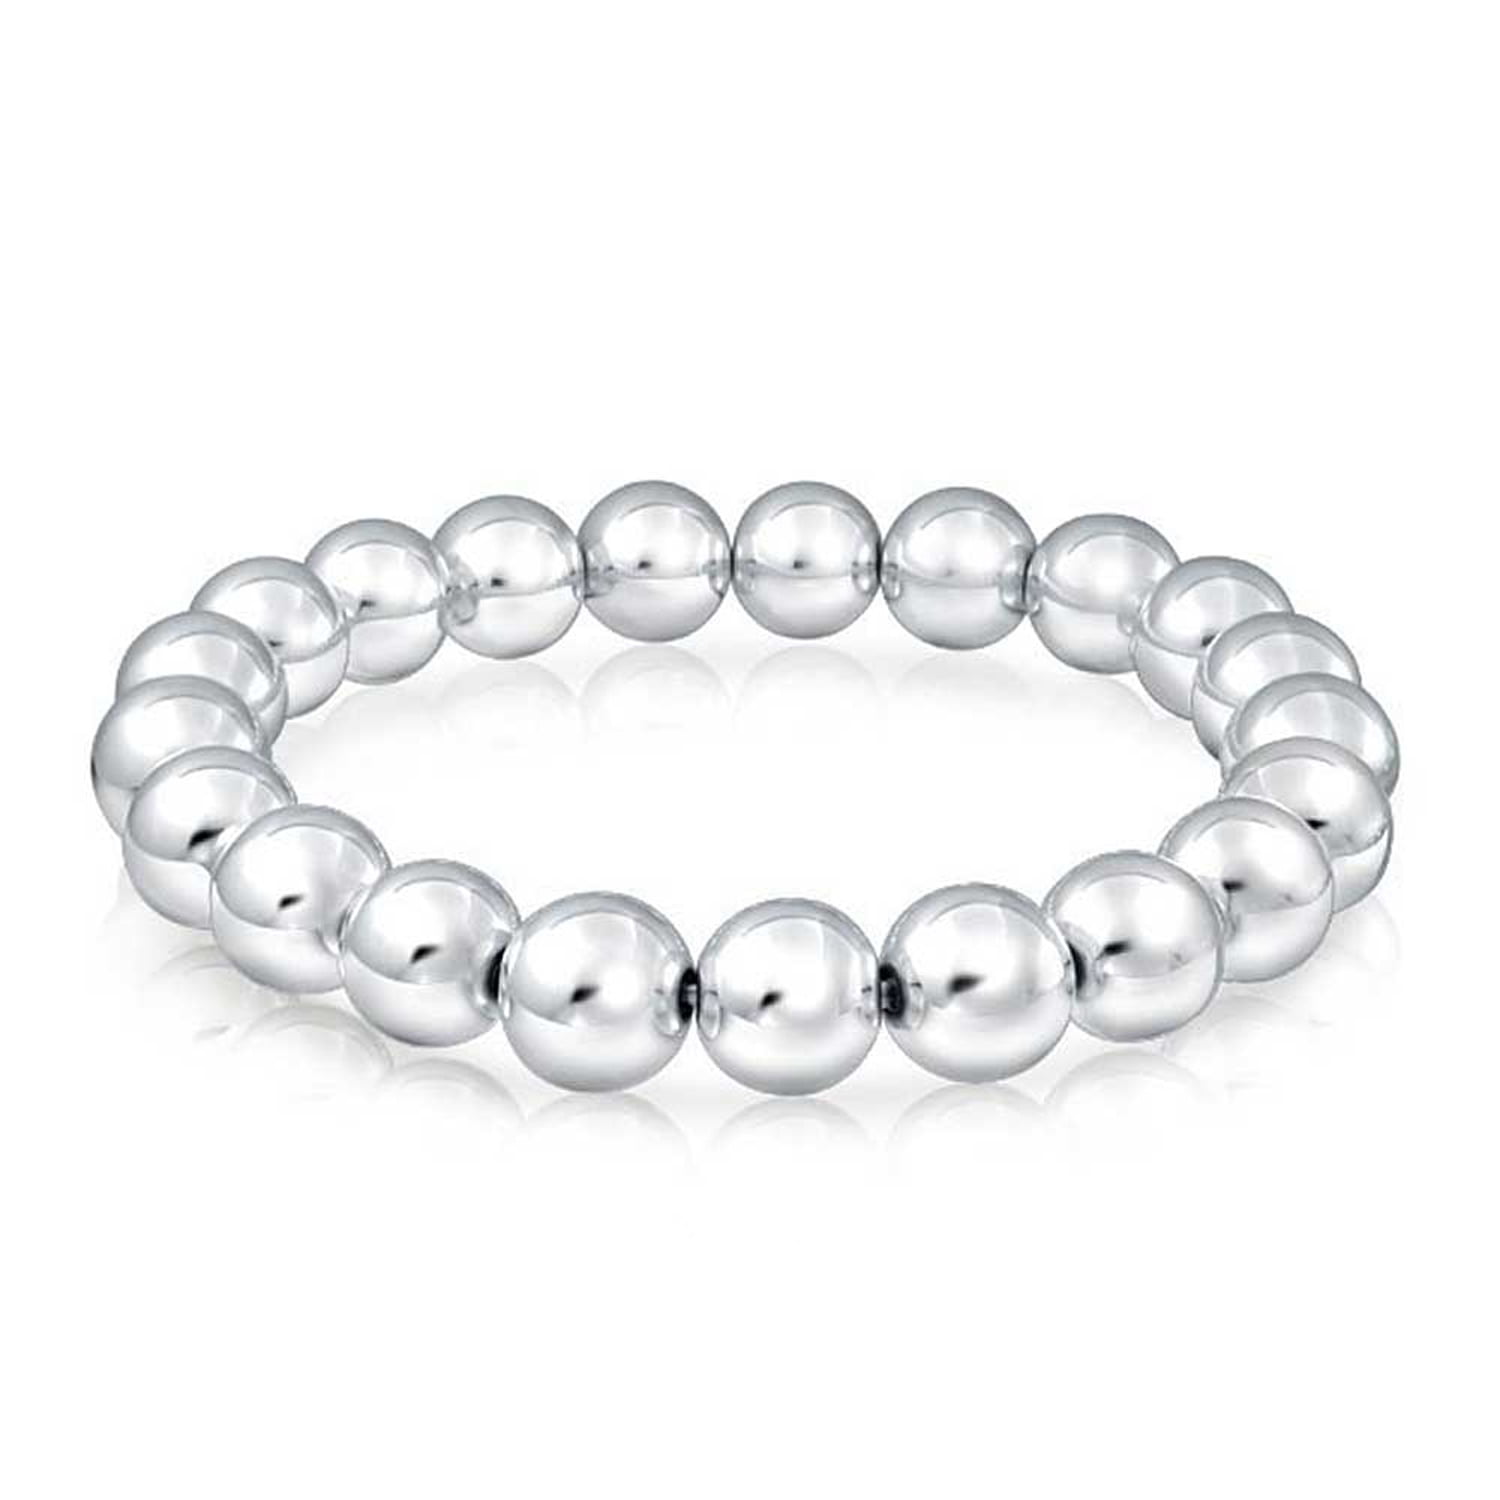 Love Heart Pendant 4mm Round Bead Charm Bracelets Jewelry Gifts for Women Silverwill 925 Sterling Silver Beads Bracelet